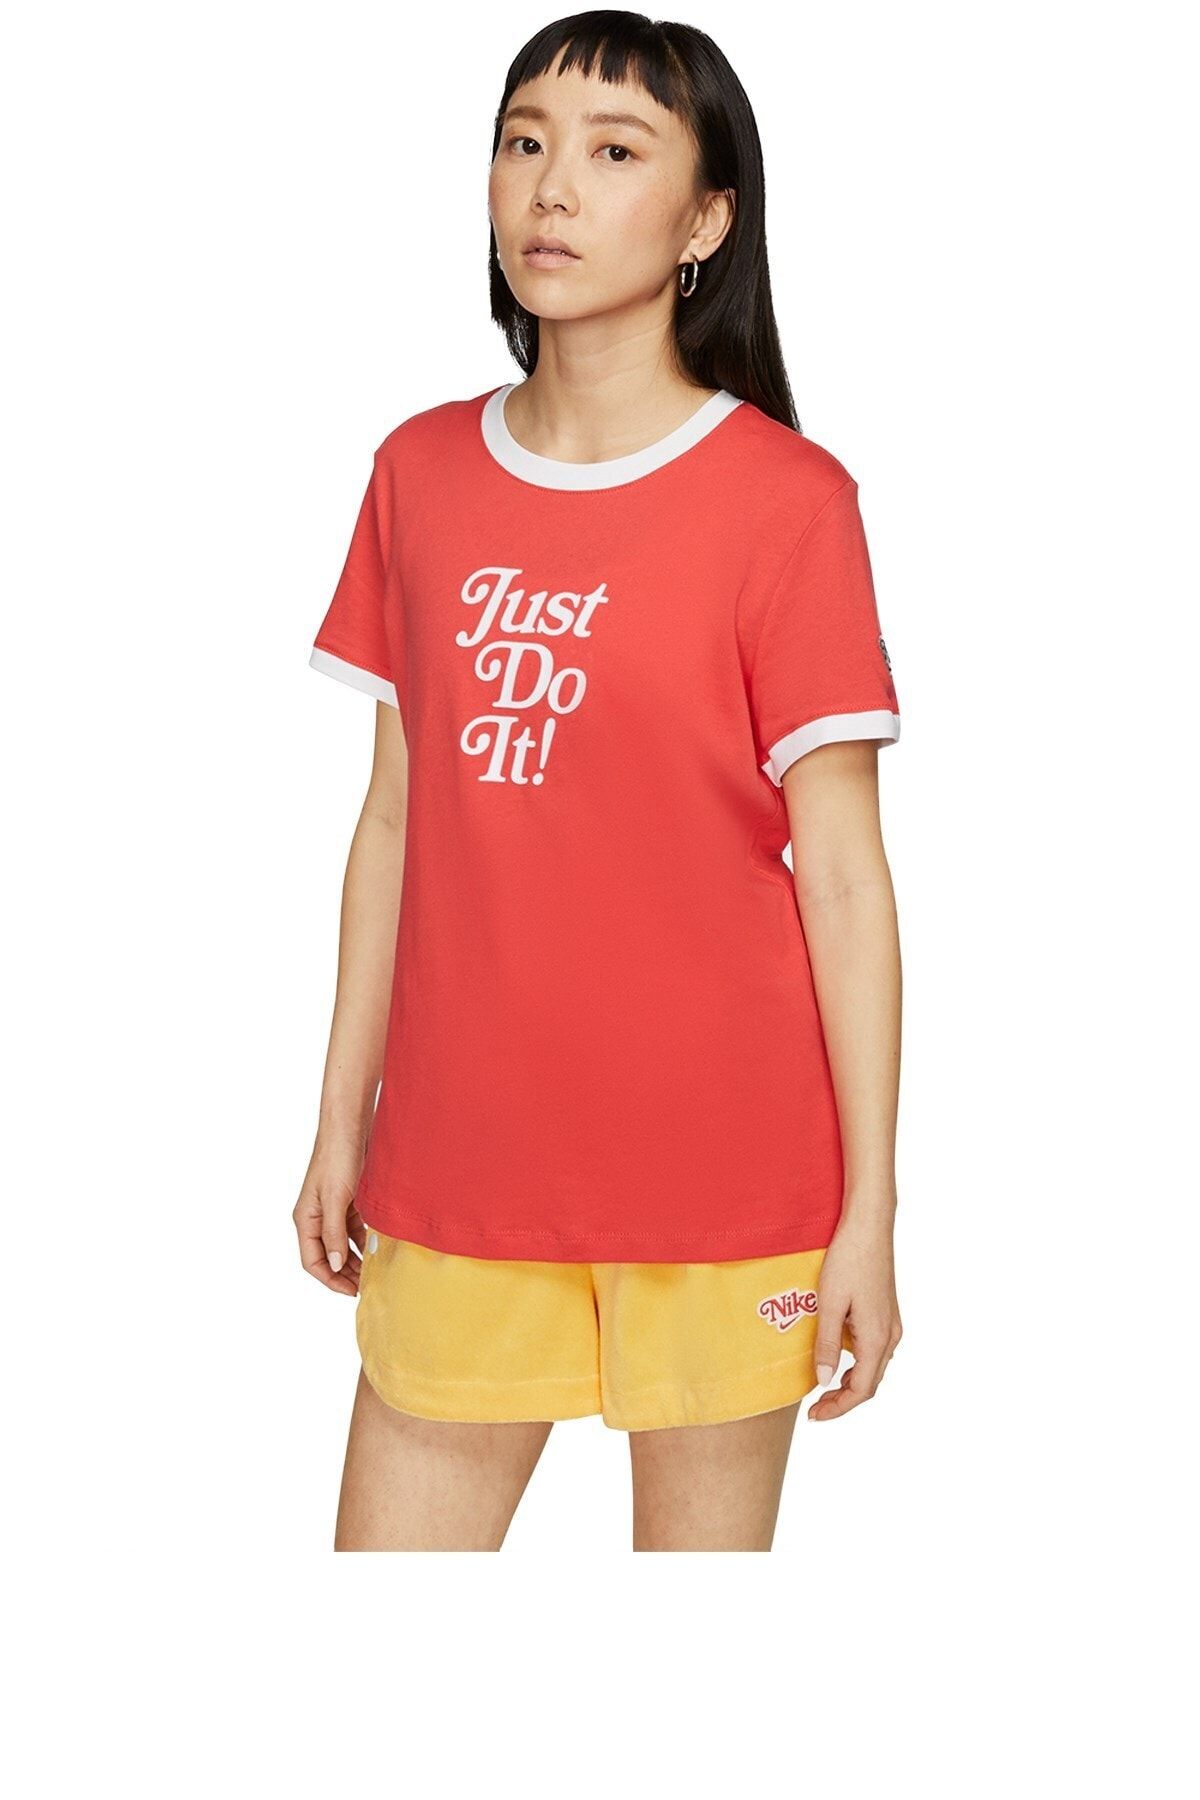 Nike Ringer Kadın T-shirt Ct8901-631